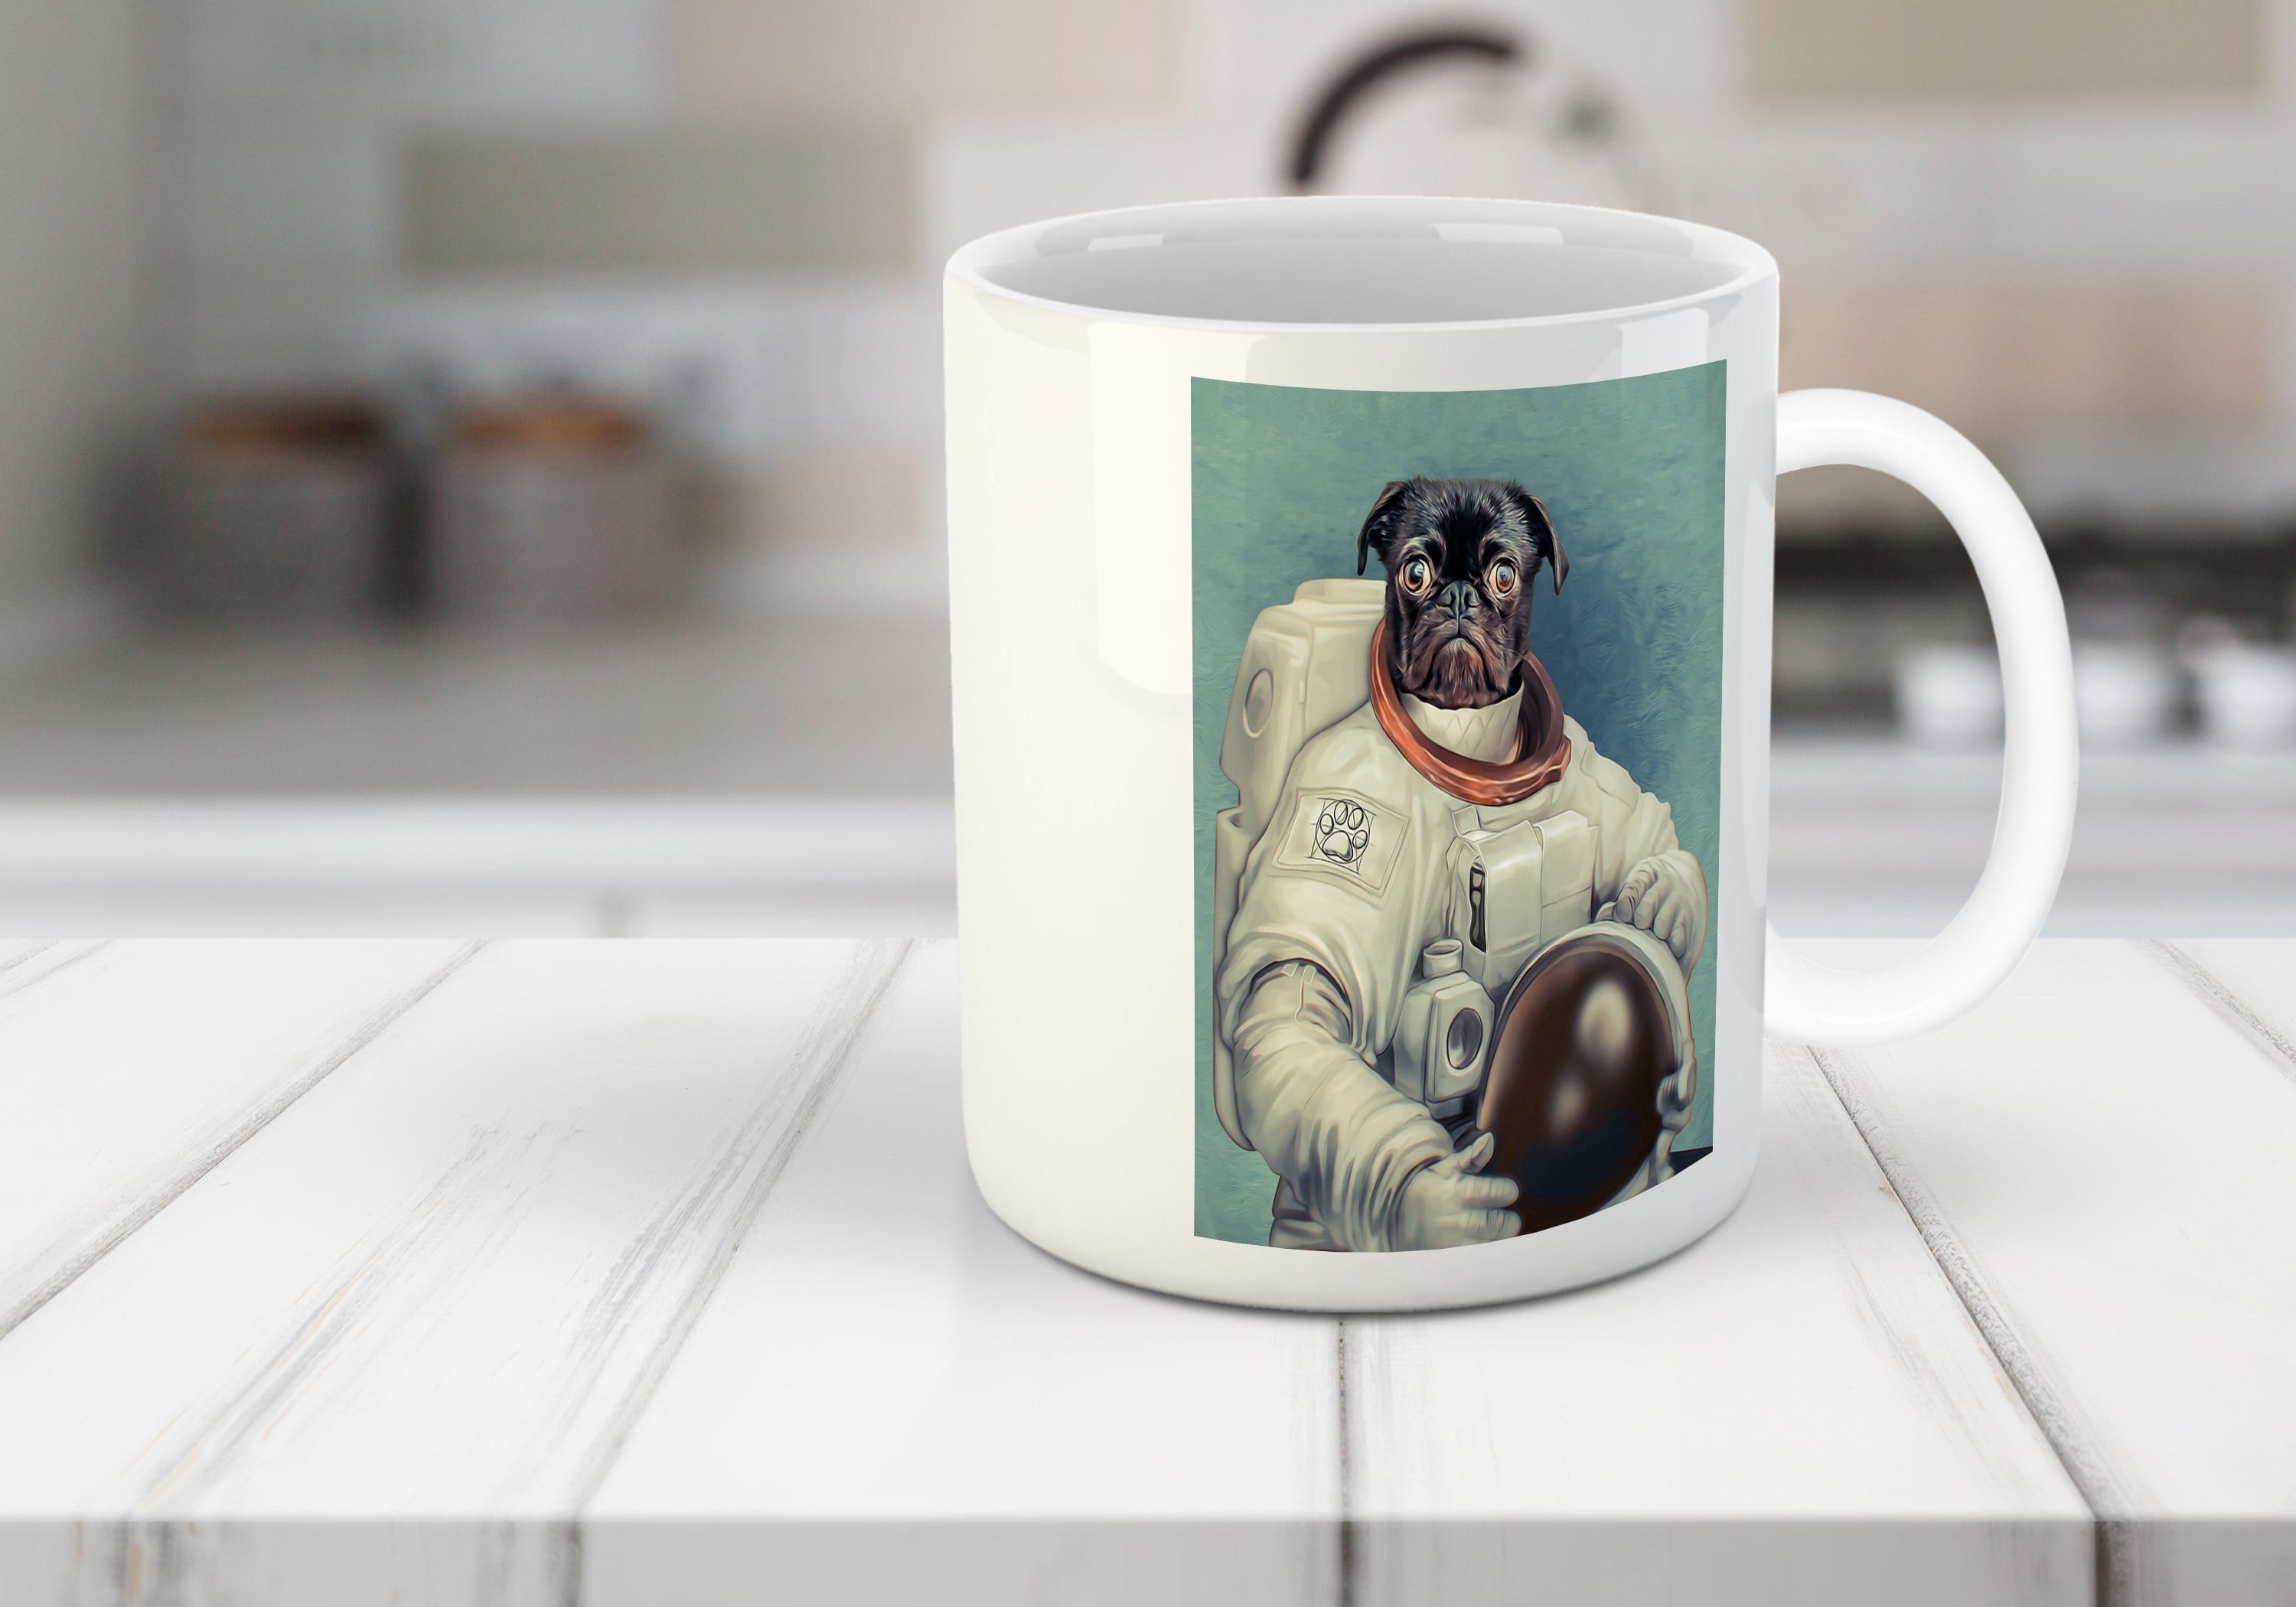 The Astronaut Custom Pet Mug